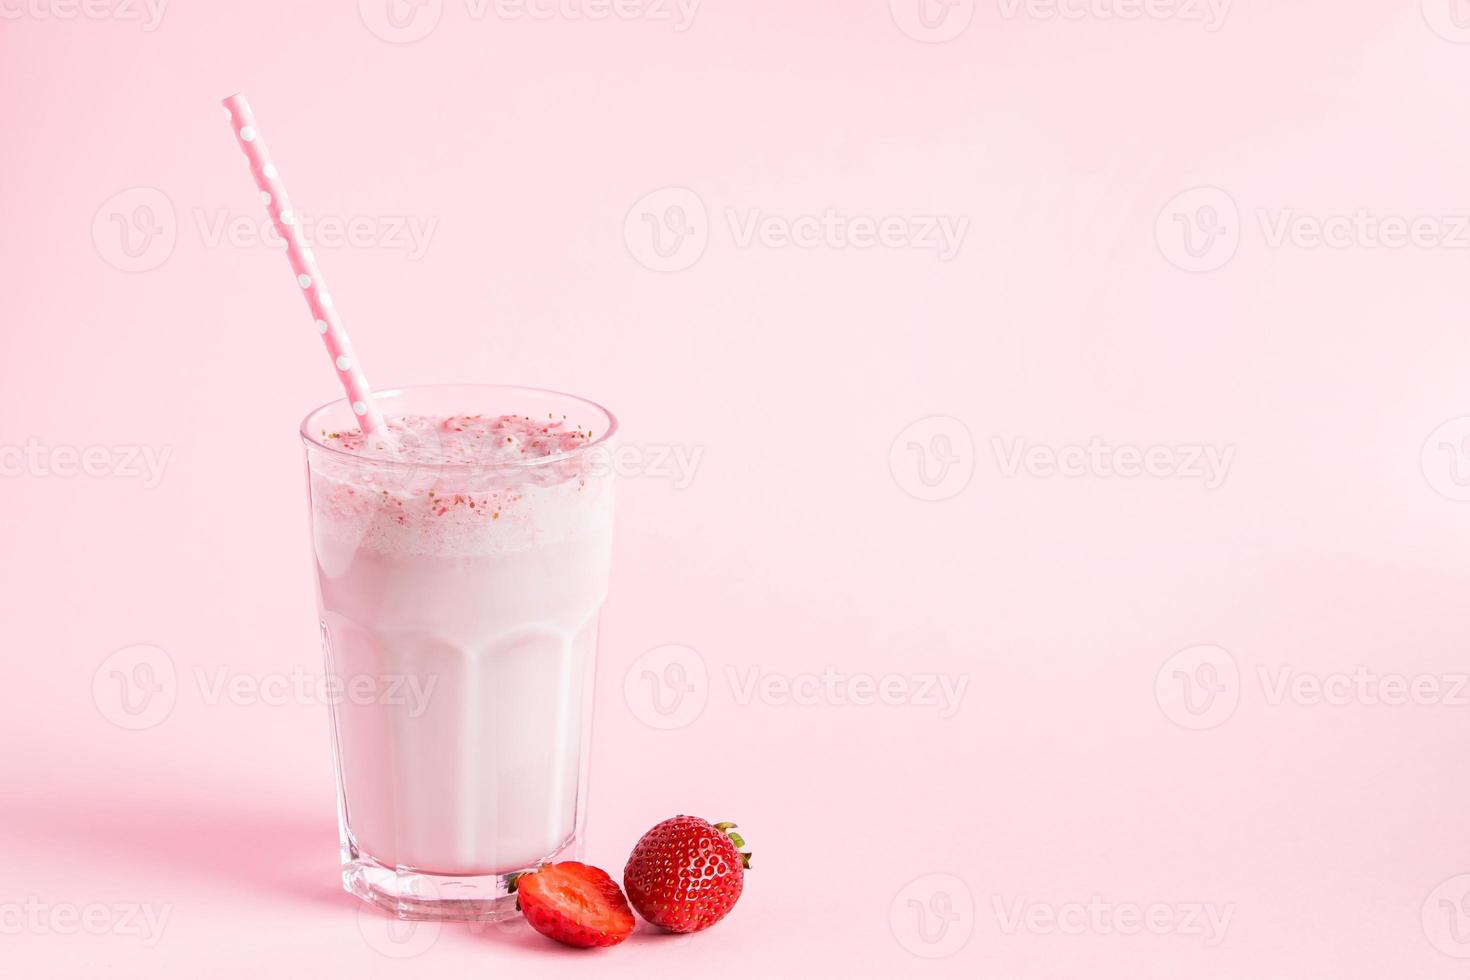 verse milkshake met aardbeien op roze achtergrond foto